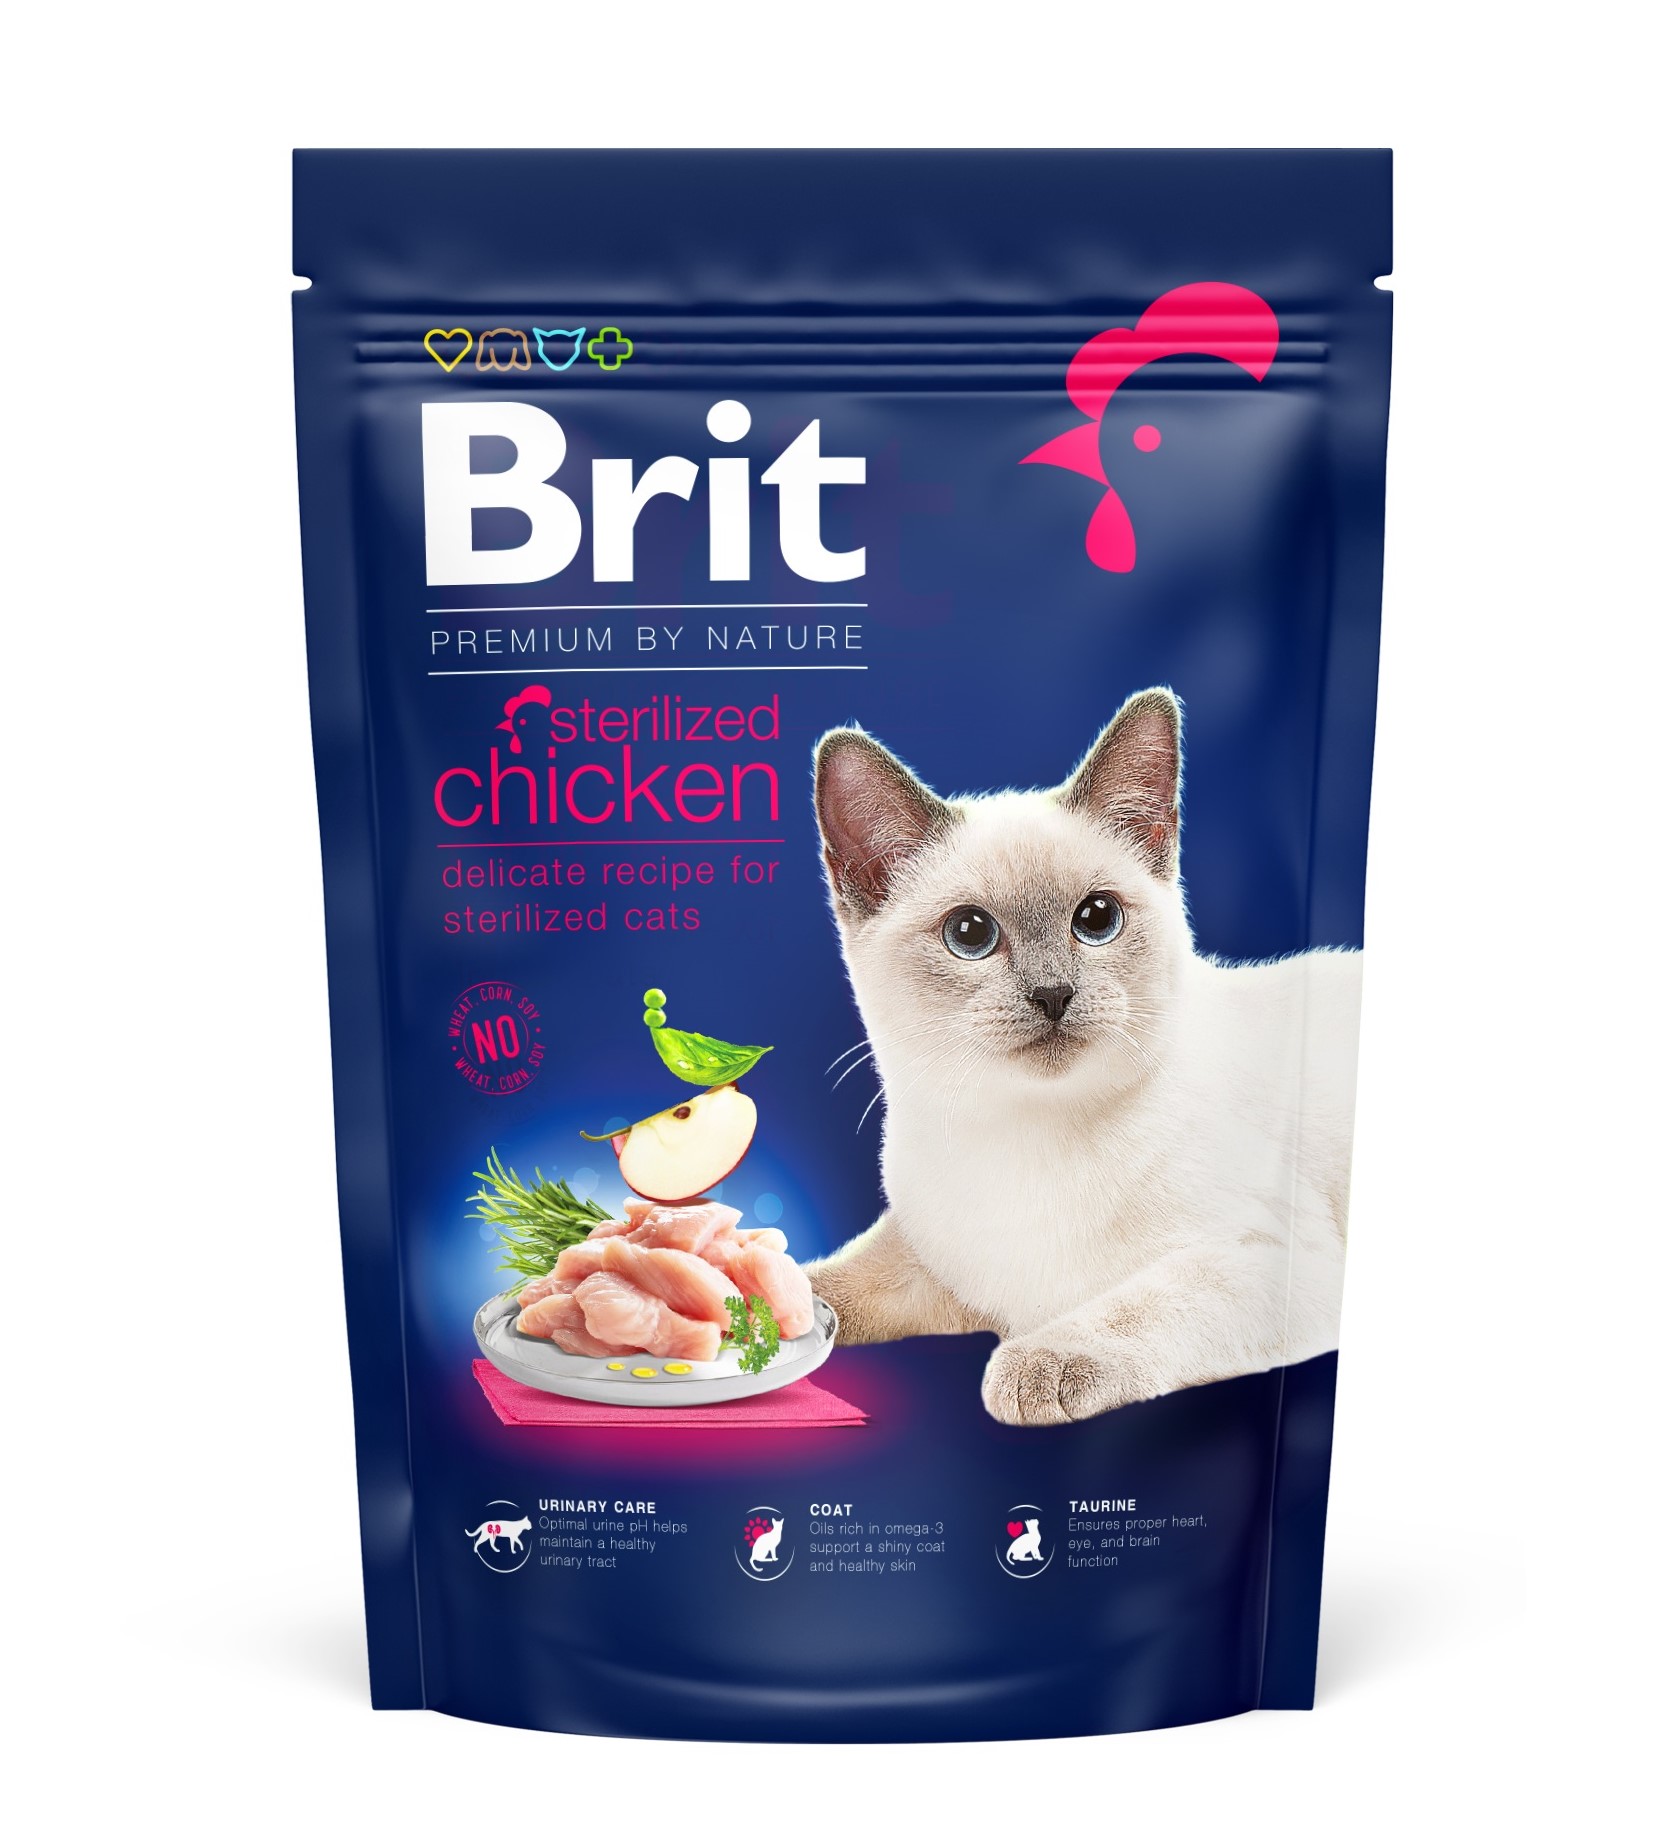 Сухой корм для котов Brit Premium by Nature Cat Sterilized Chicken - 1